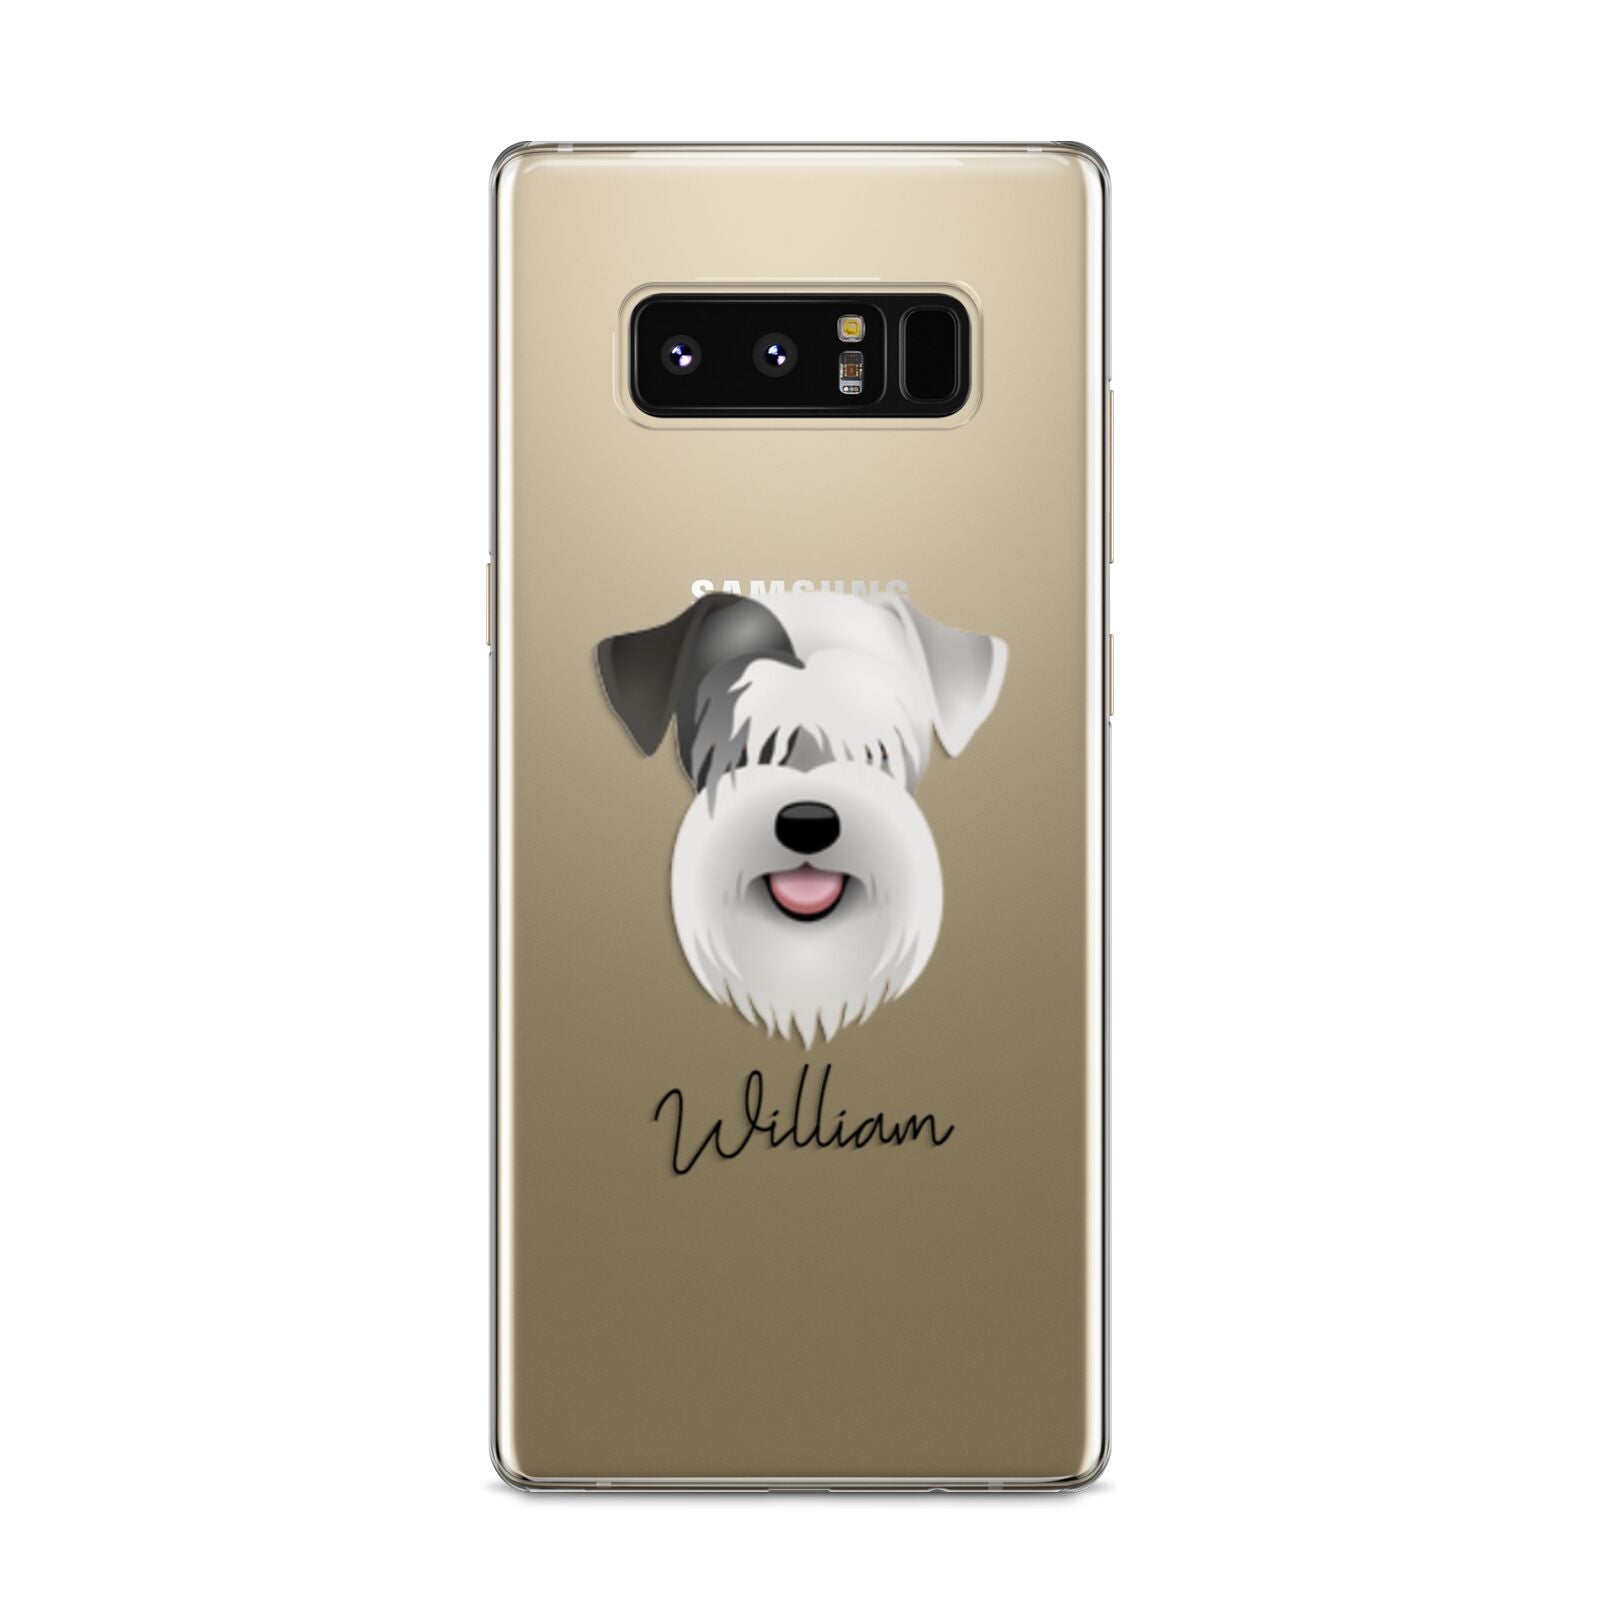 Sealyham Terrier Personalised Samsung Galaxy S8 Case